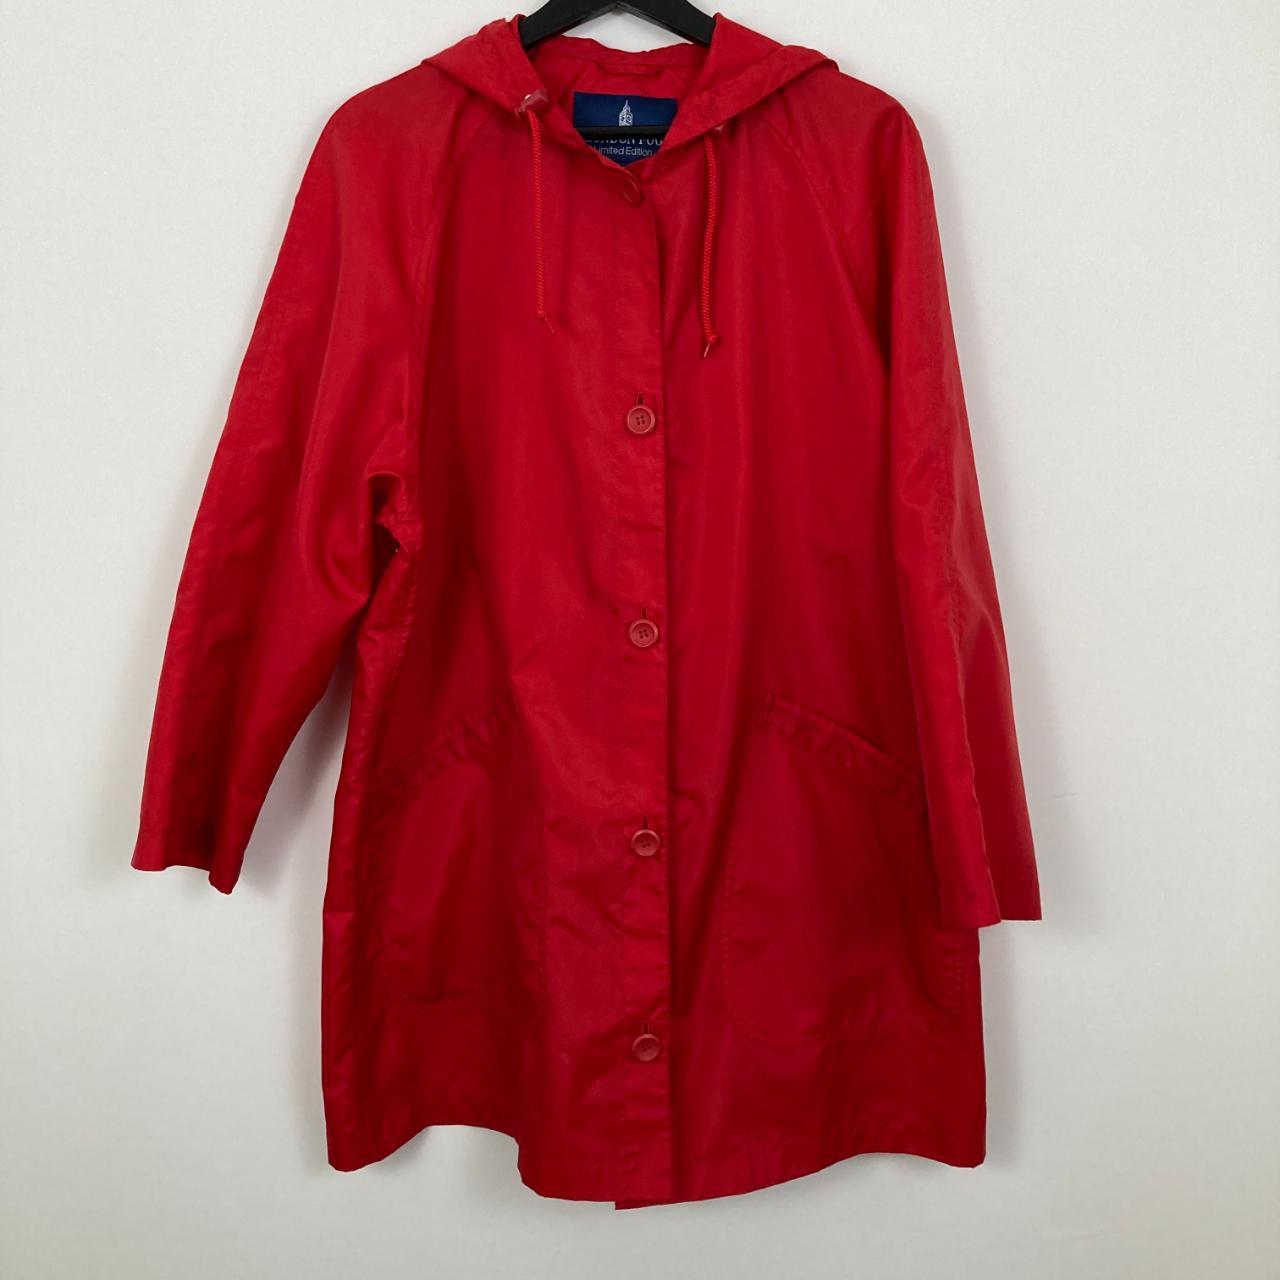 Vintage red hooded rain trench coat | London fog tag... - Depop